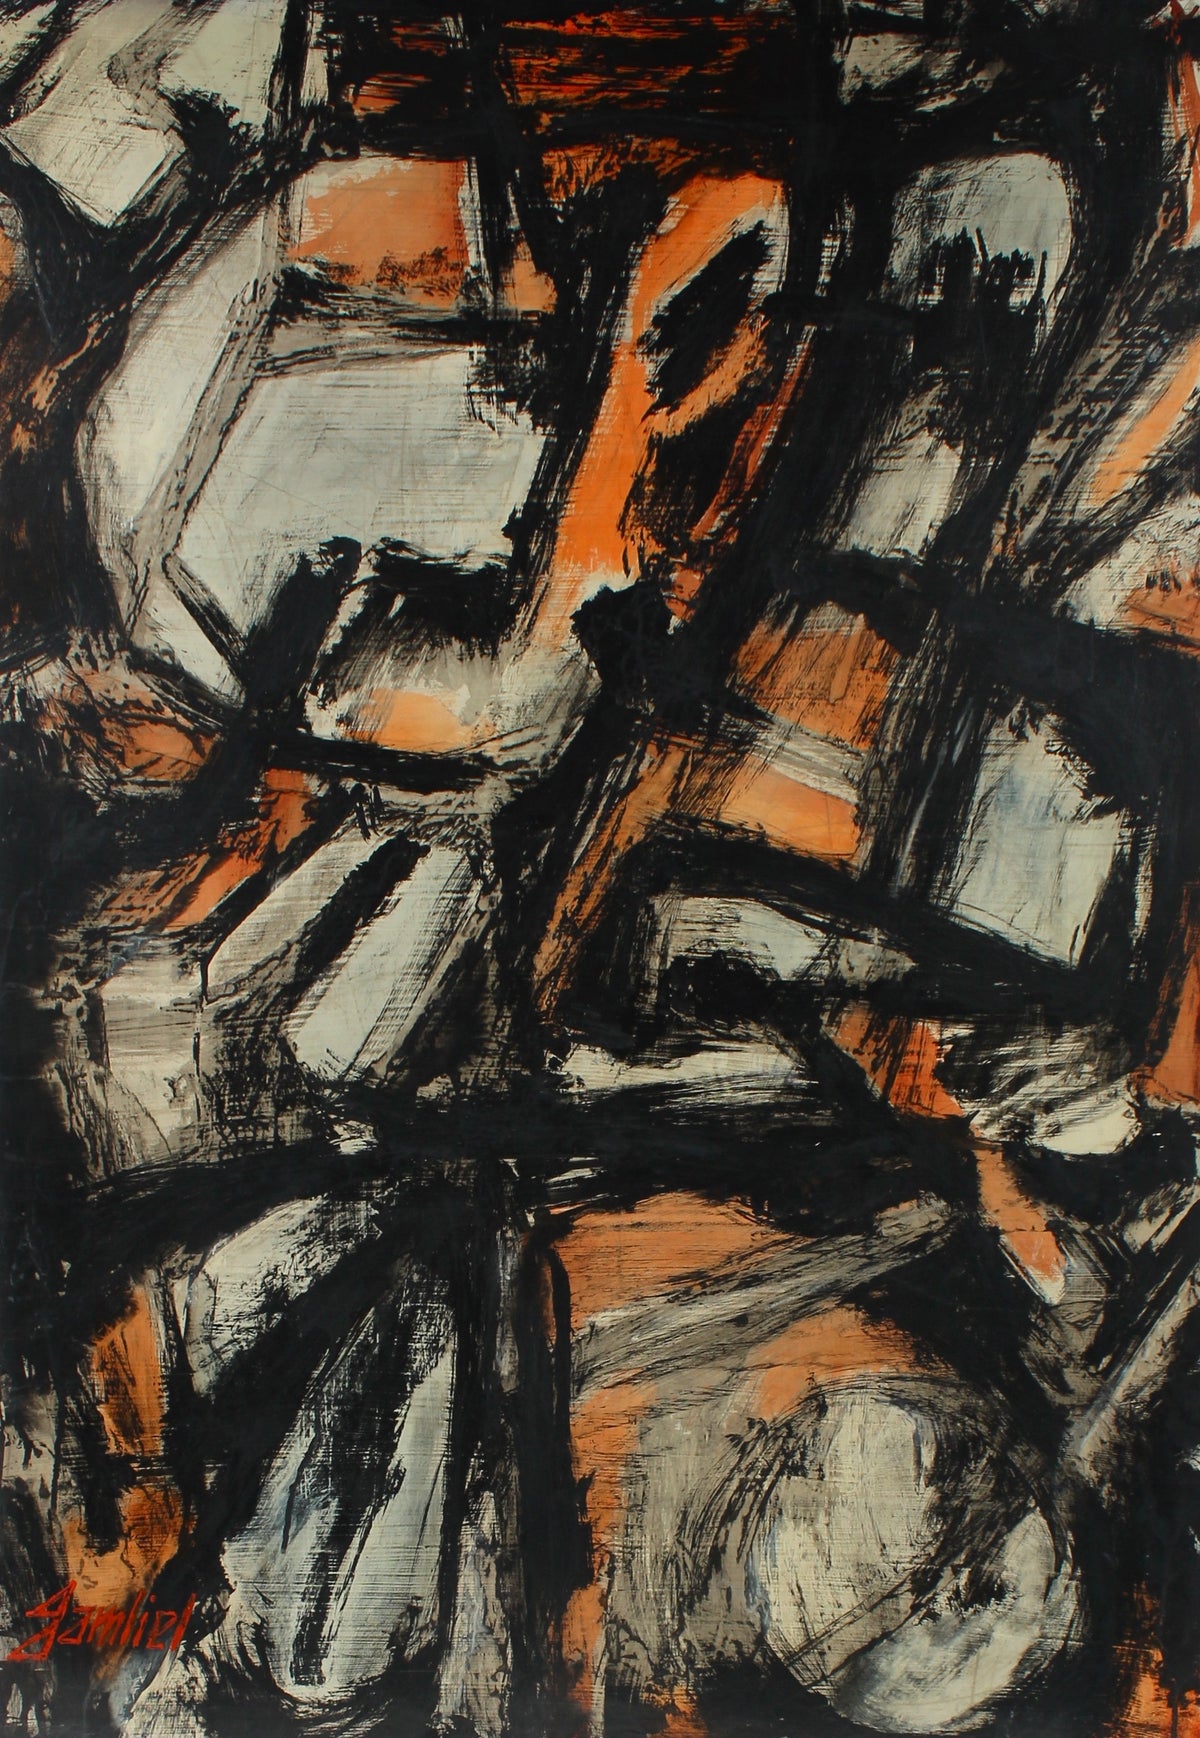 Orange &amp; Black Abstract Expressionist Paint on Masonite&lt;br&gt;&lt;br&gt;#95840